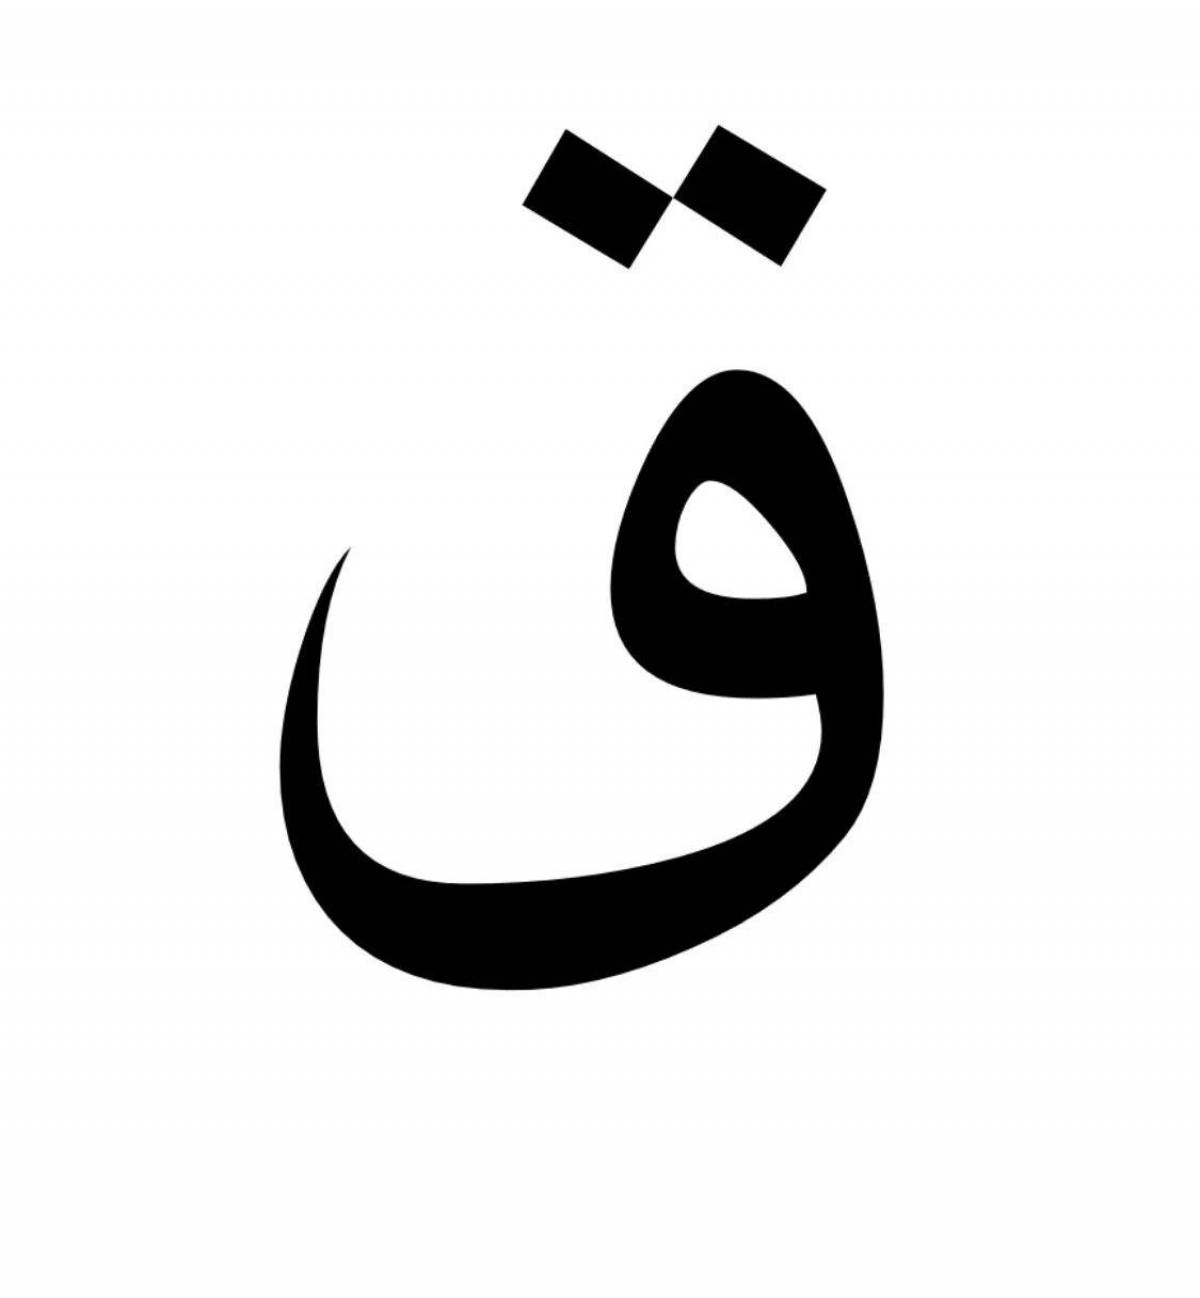 14 на арабском. Буква са арабского алфавита. Арабский алфавит Алиф. Арабские символы. Символы арабские буквы.